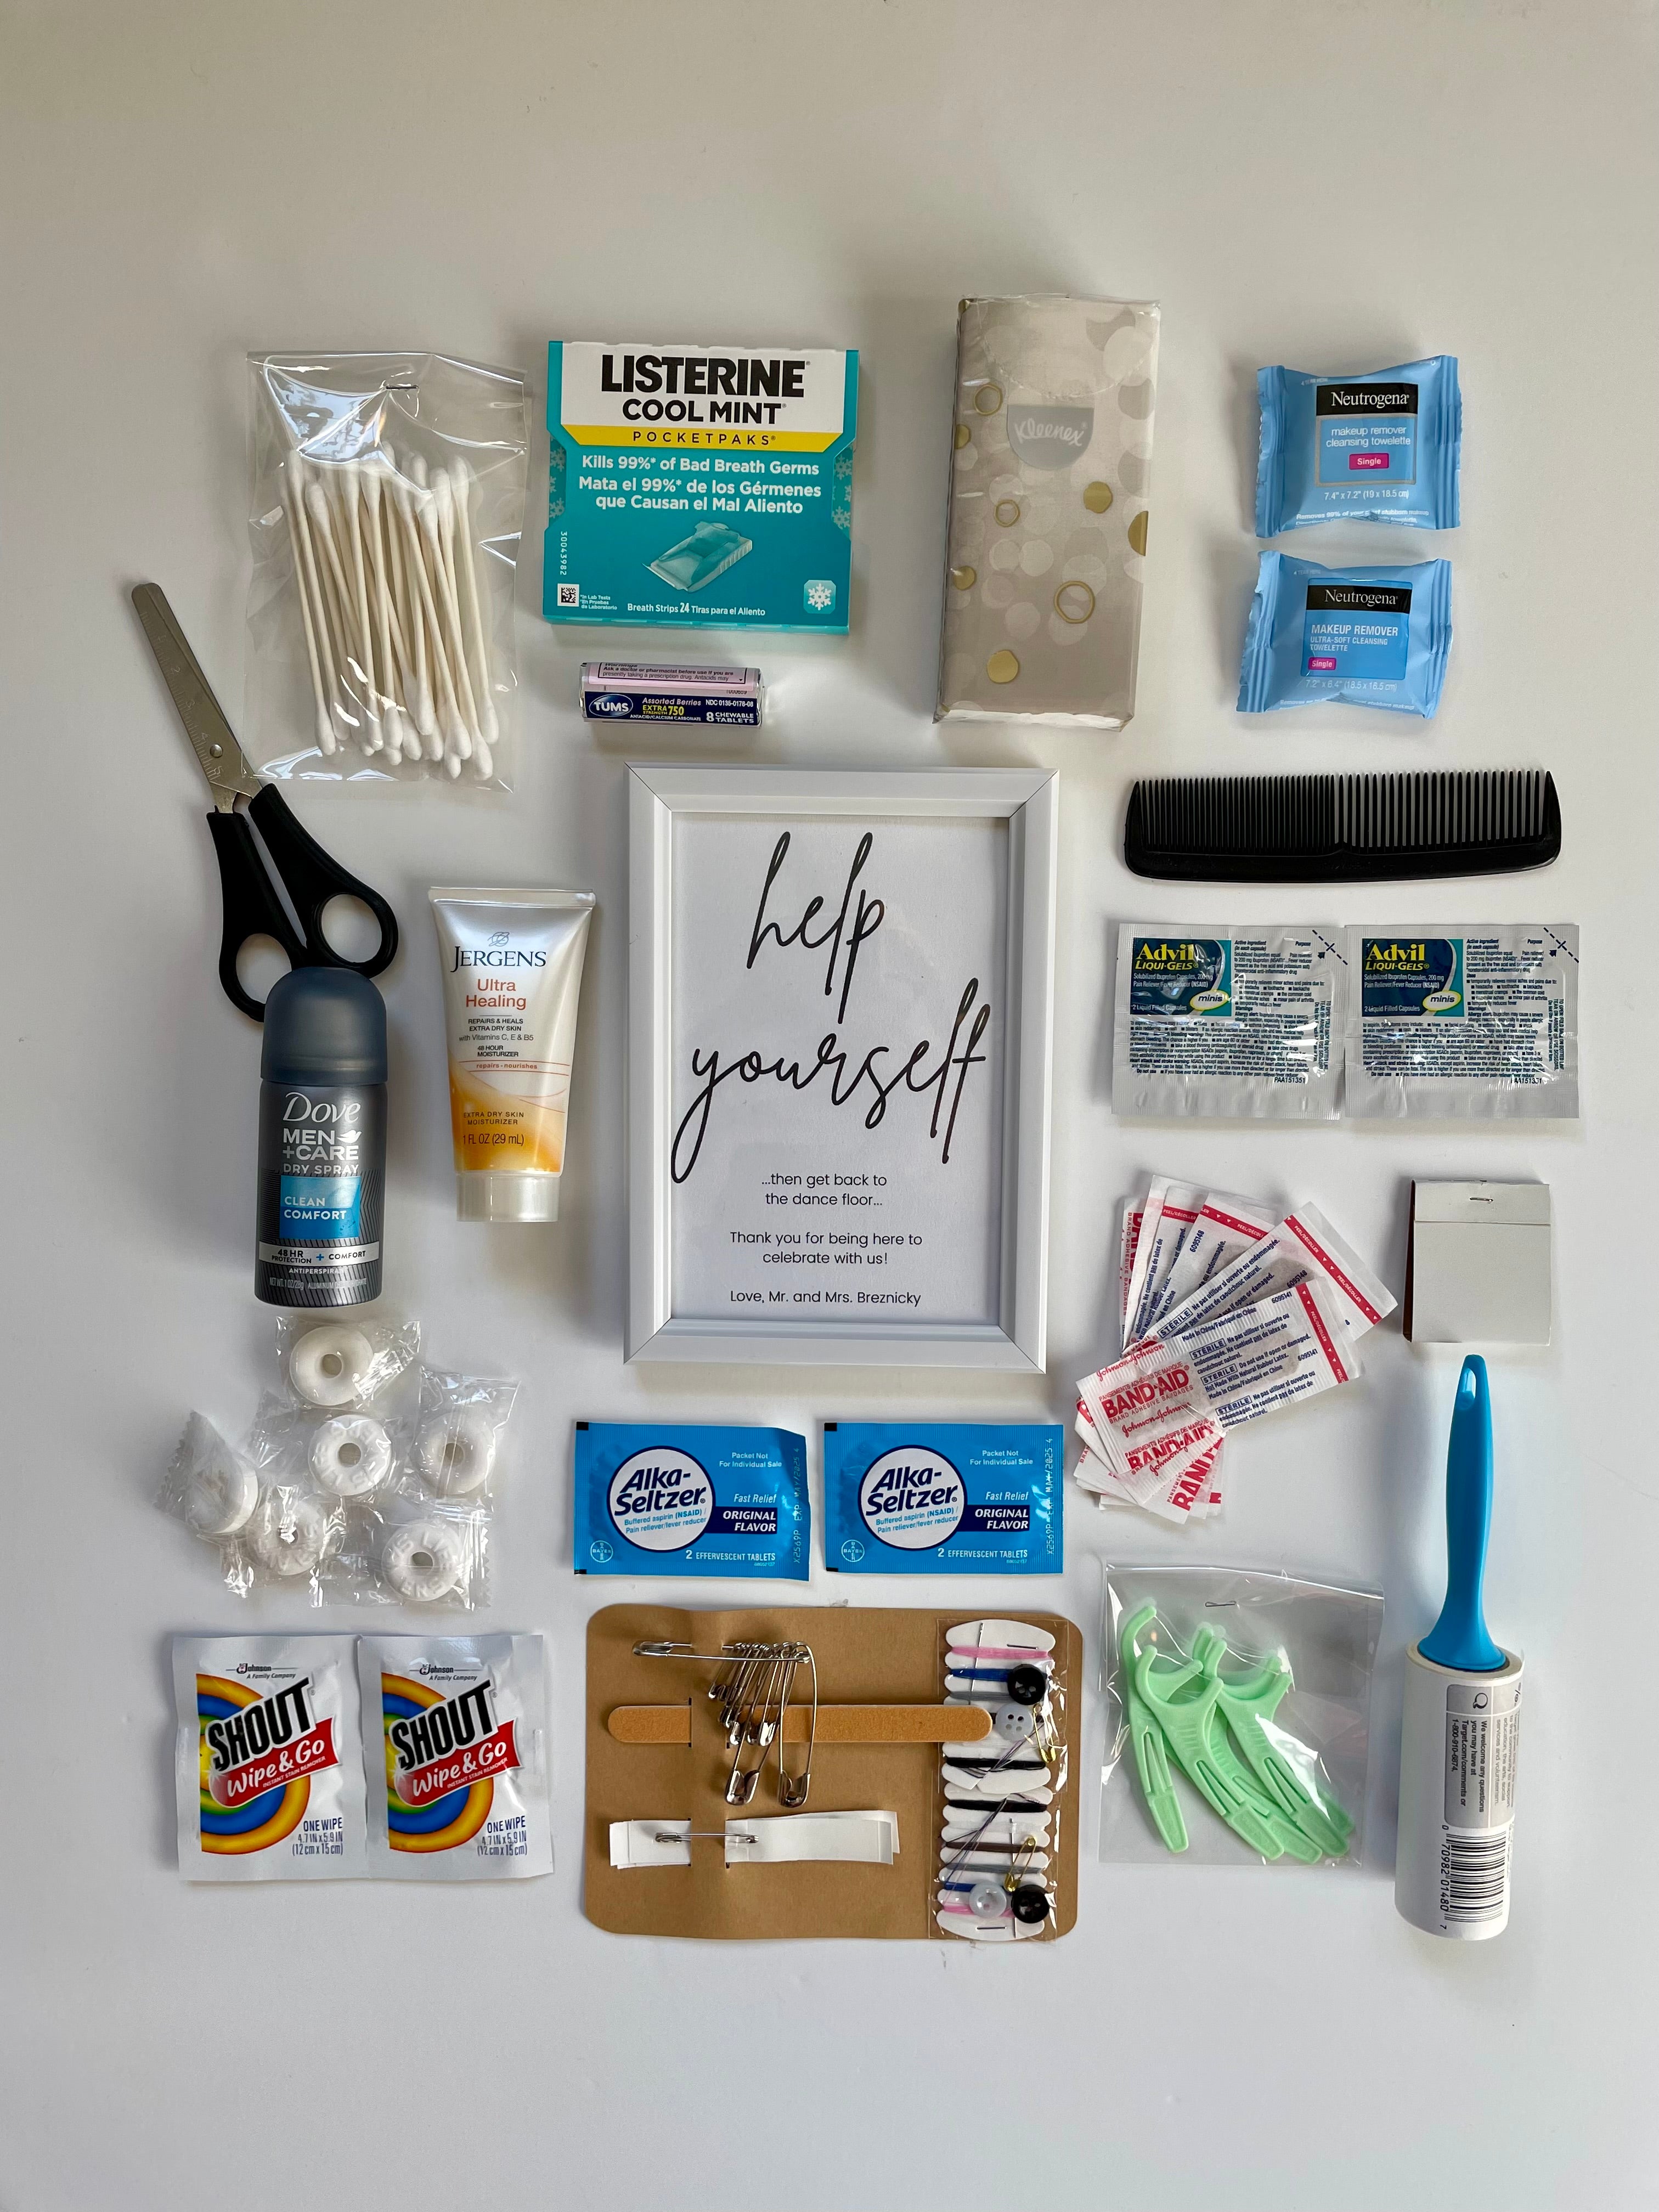 Foil Wedding Day Emergency kit